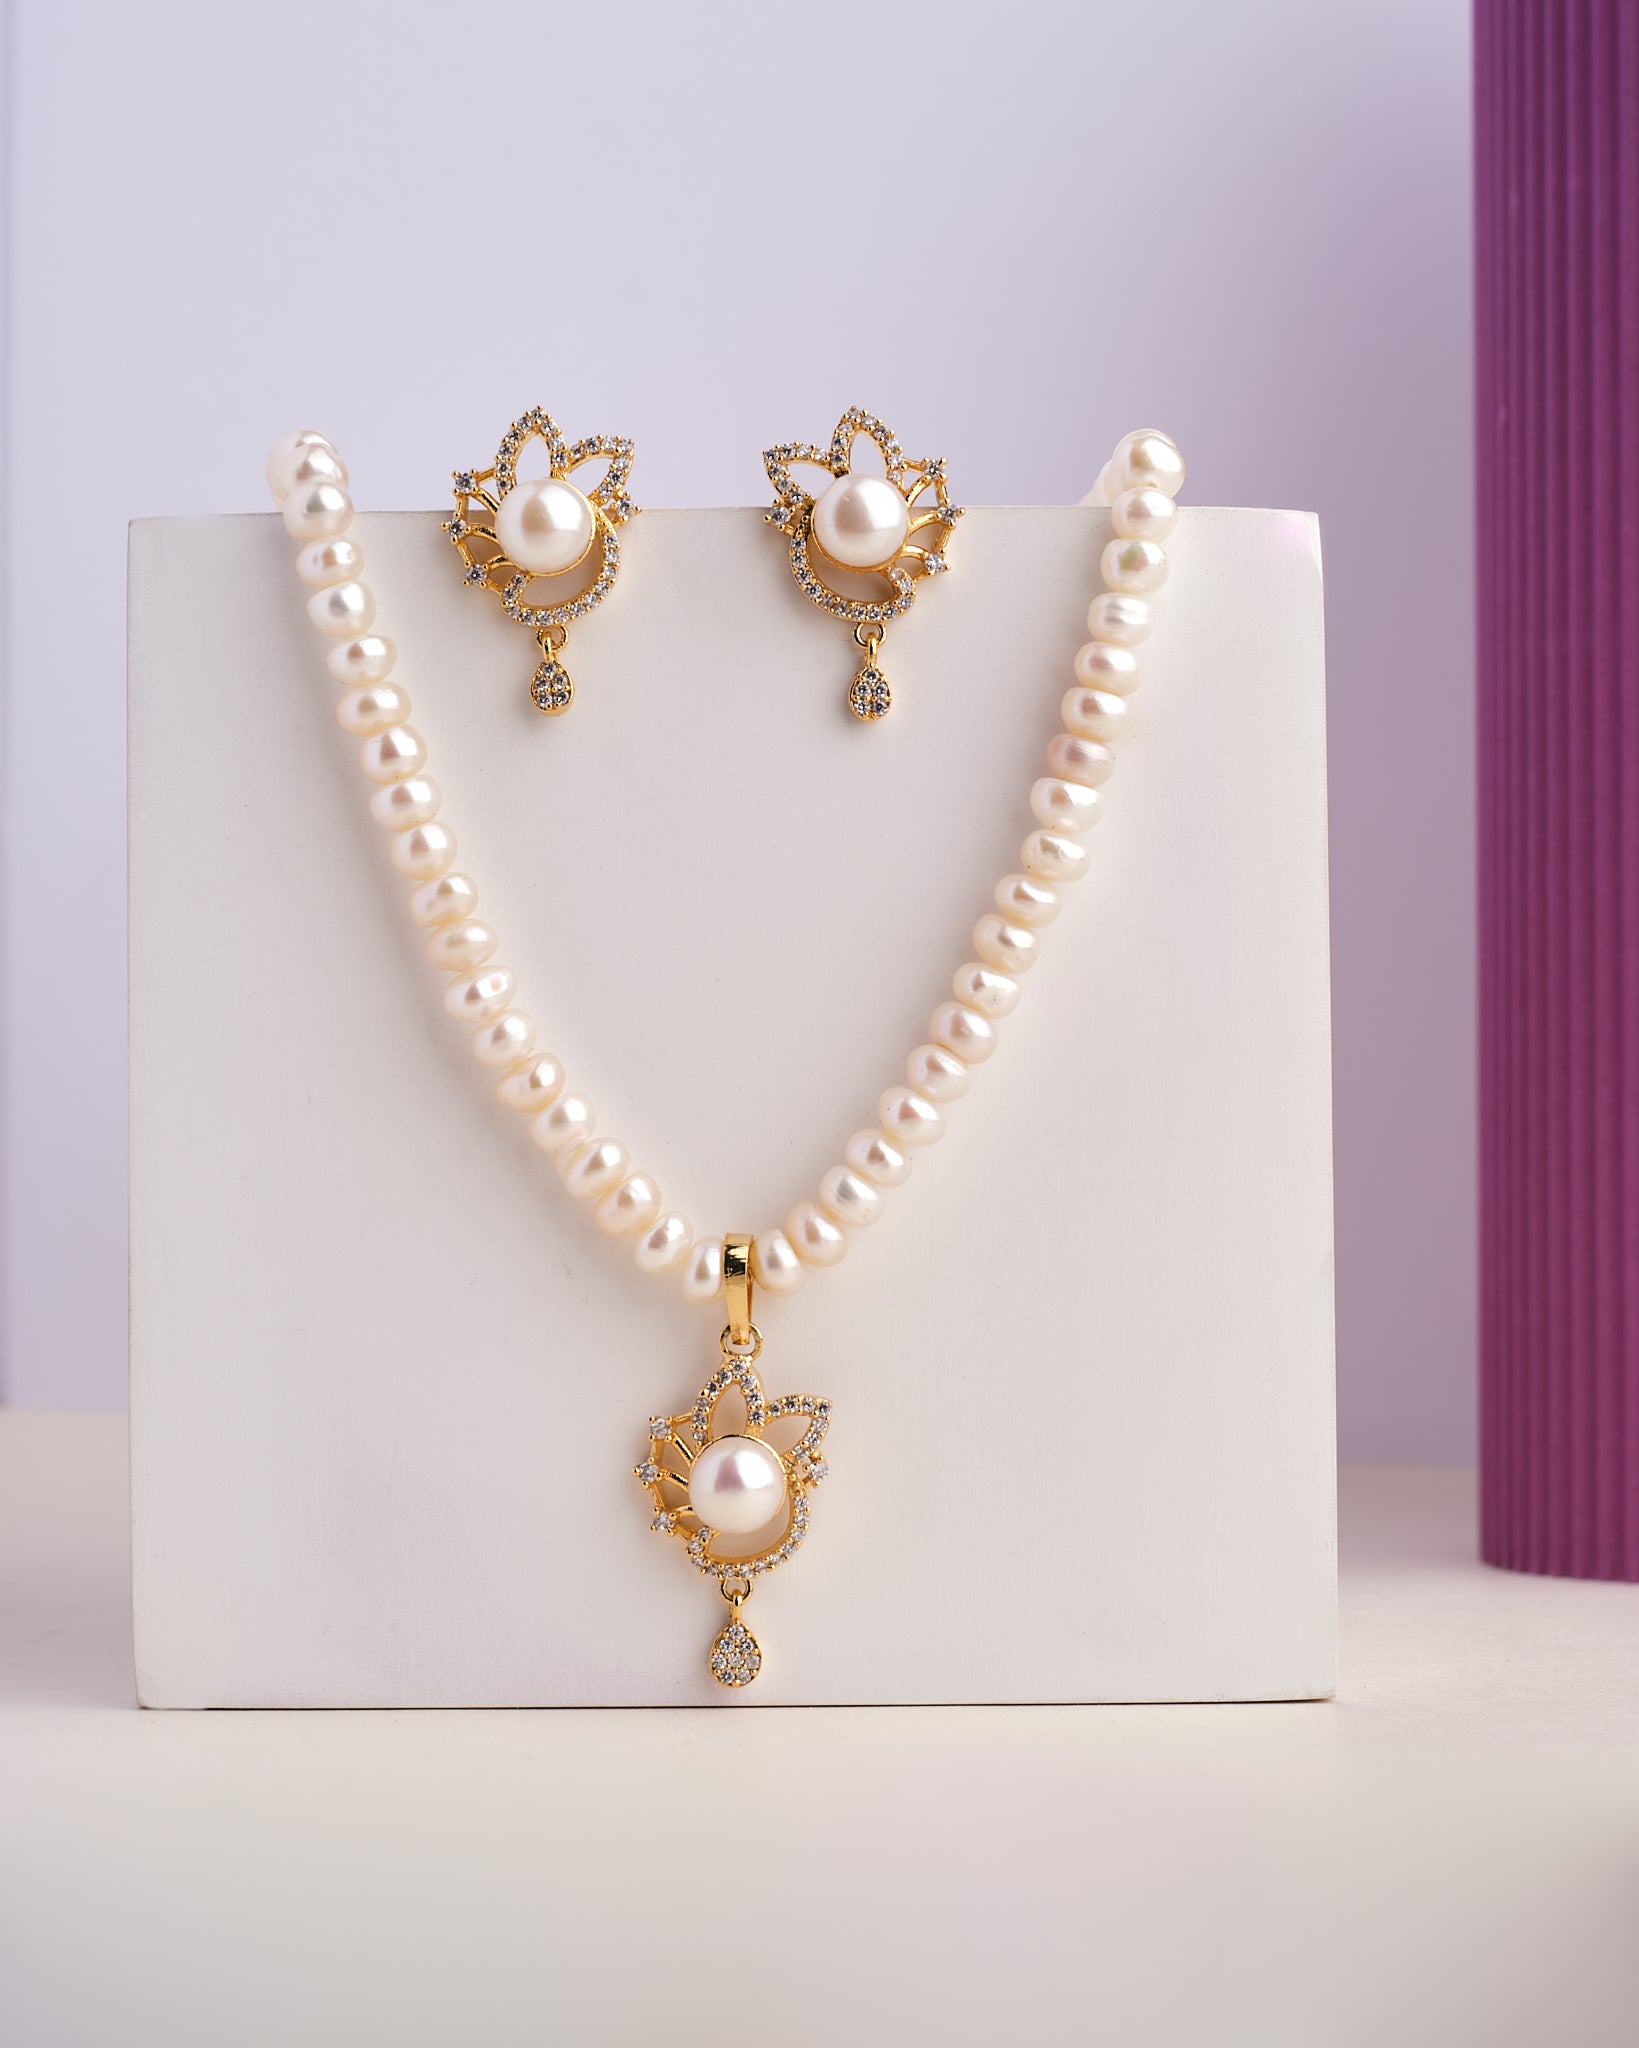 The Elllinor Pearl Necklace set